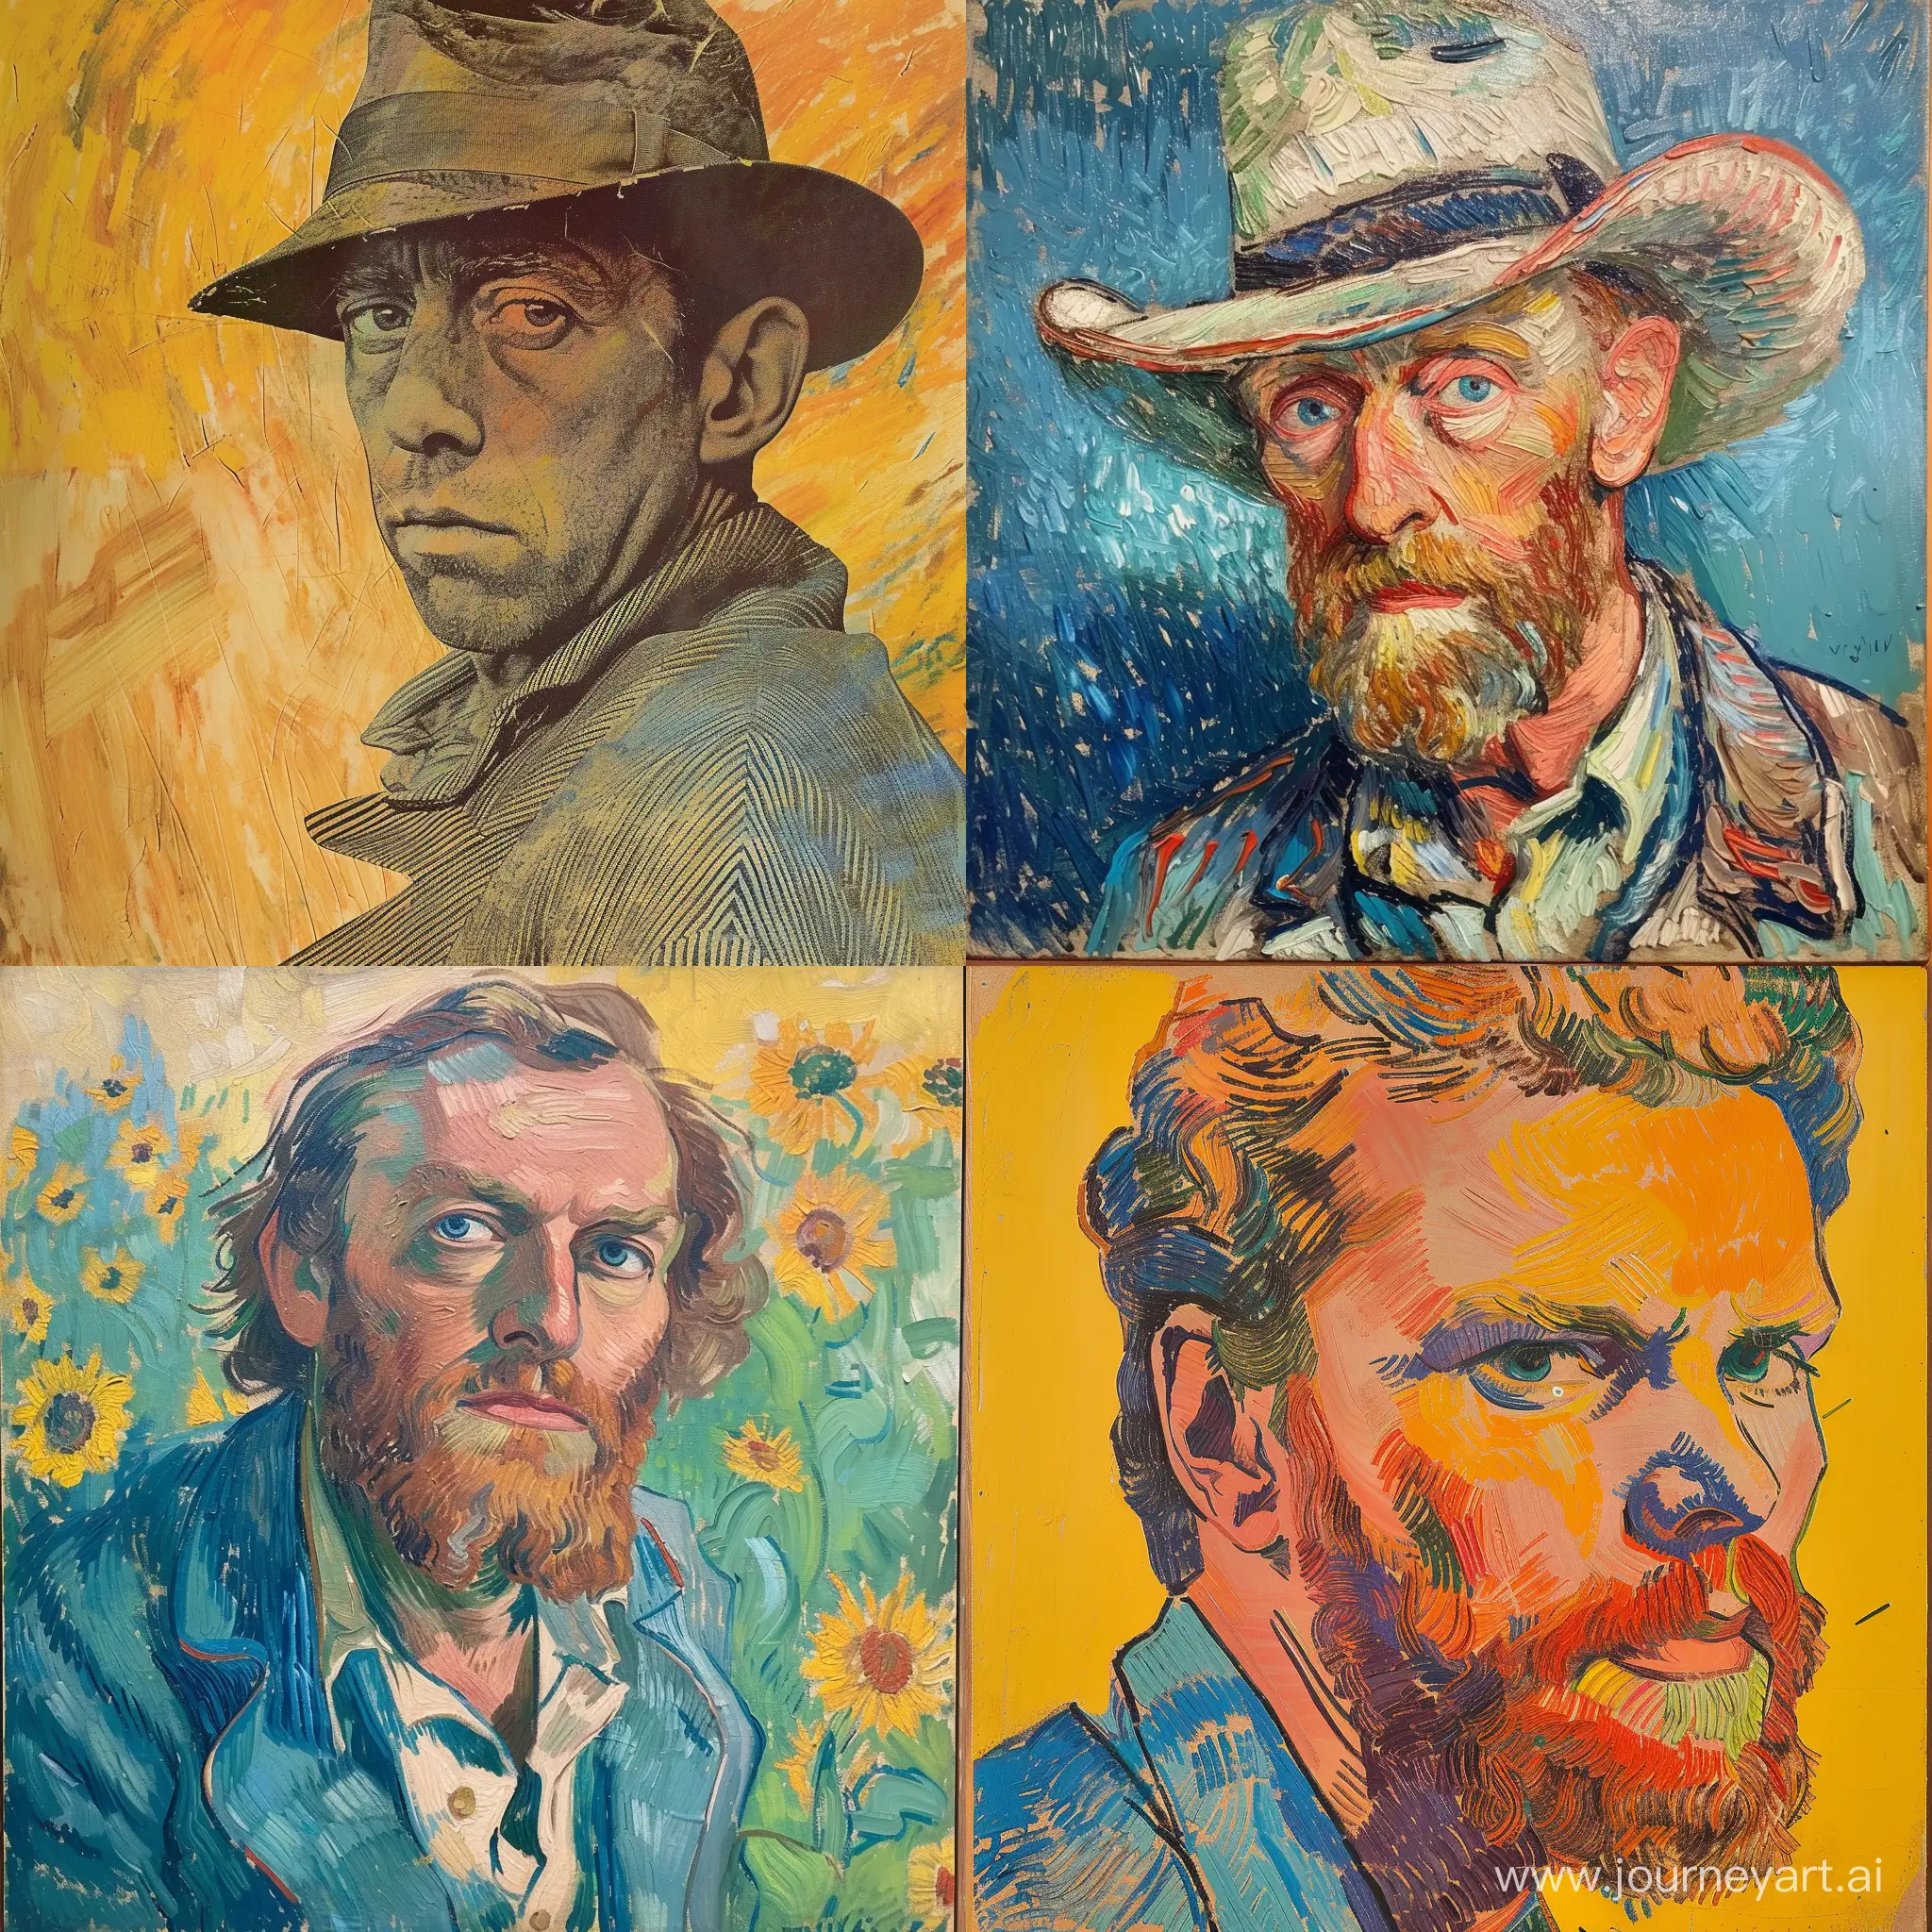 Bob-Dylan-Portrait-in-Van-Gogh-Style-circa-1965